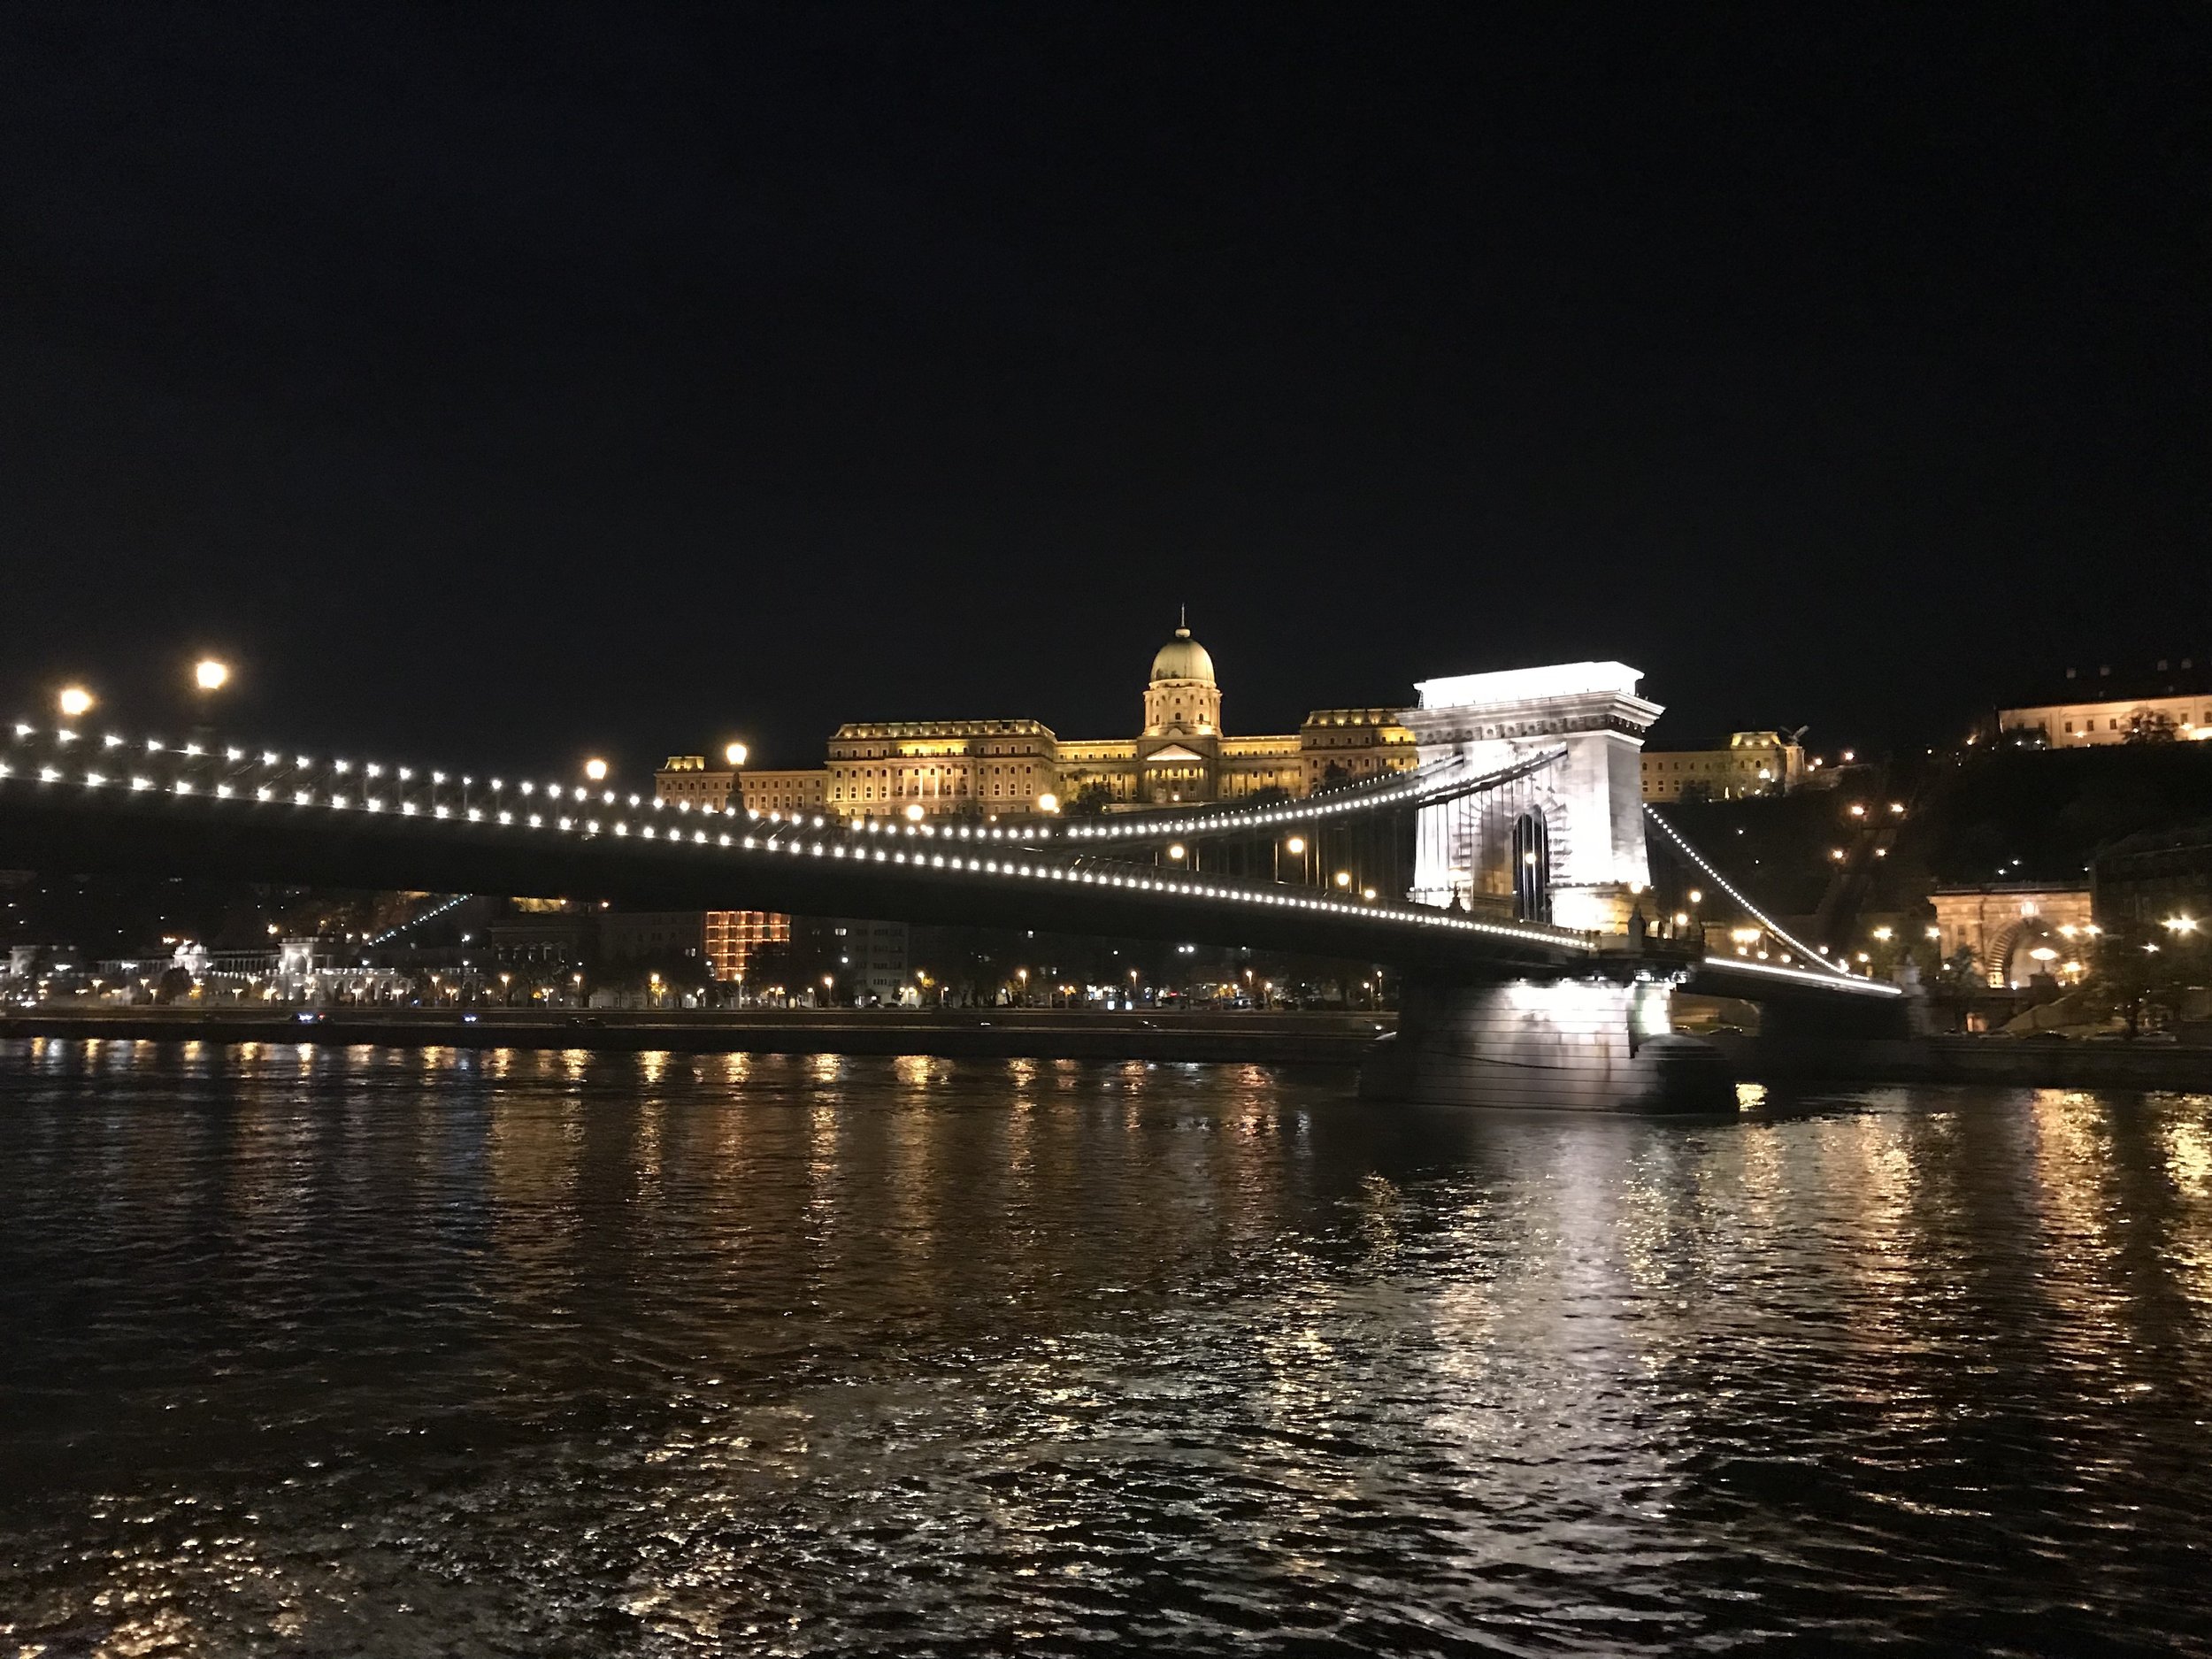 Budapest's Castle Hill and Chain Bridge